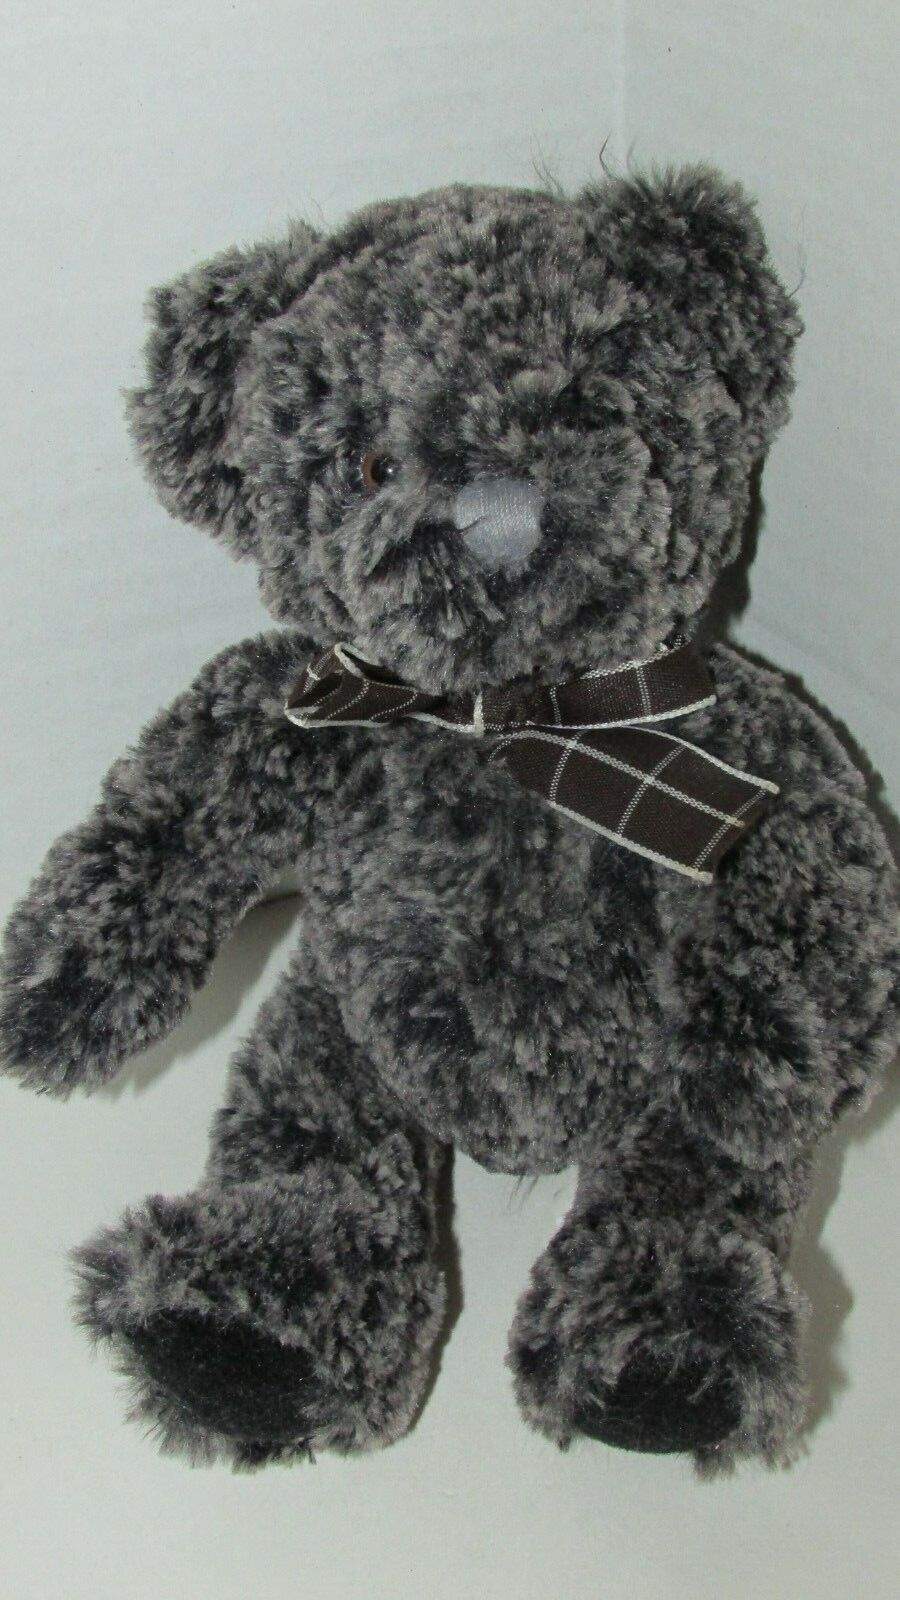 Primary image for Russ Small black gray tan cream plush teddy bear brown bow bean tush textured